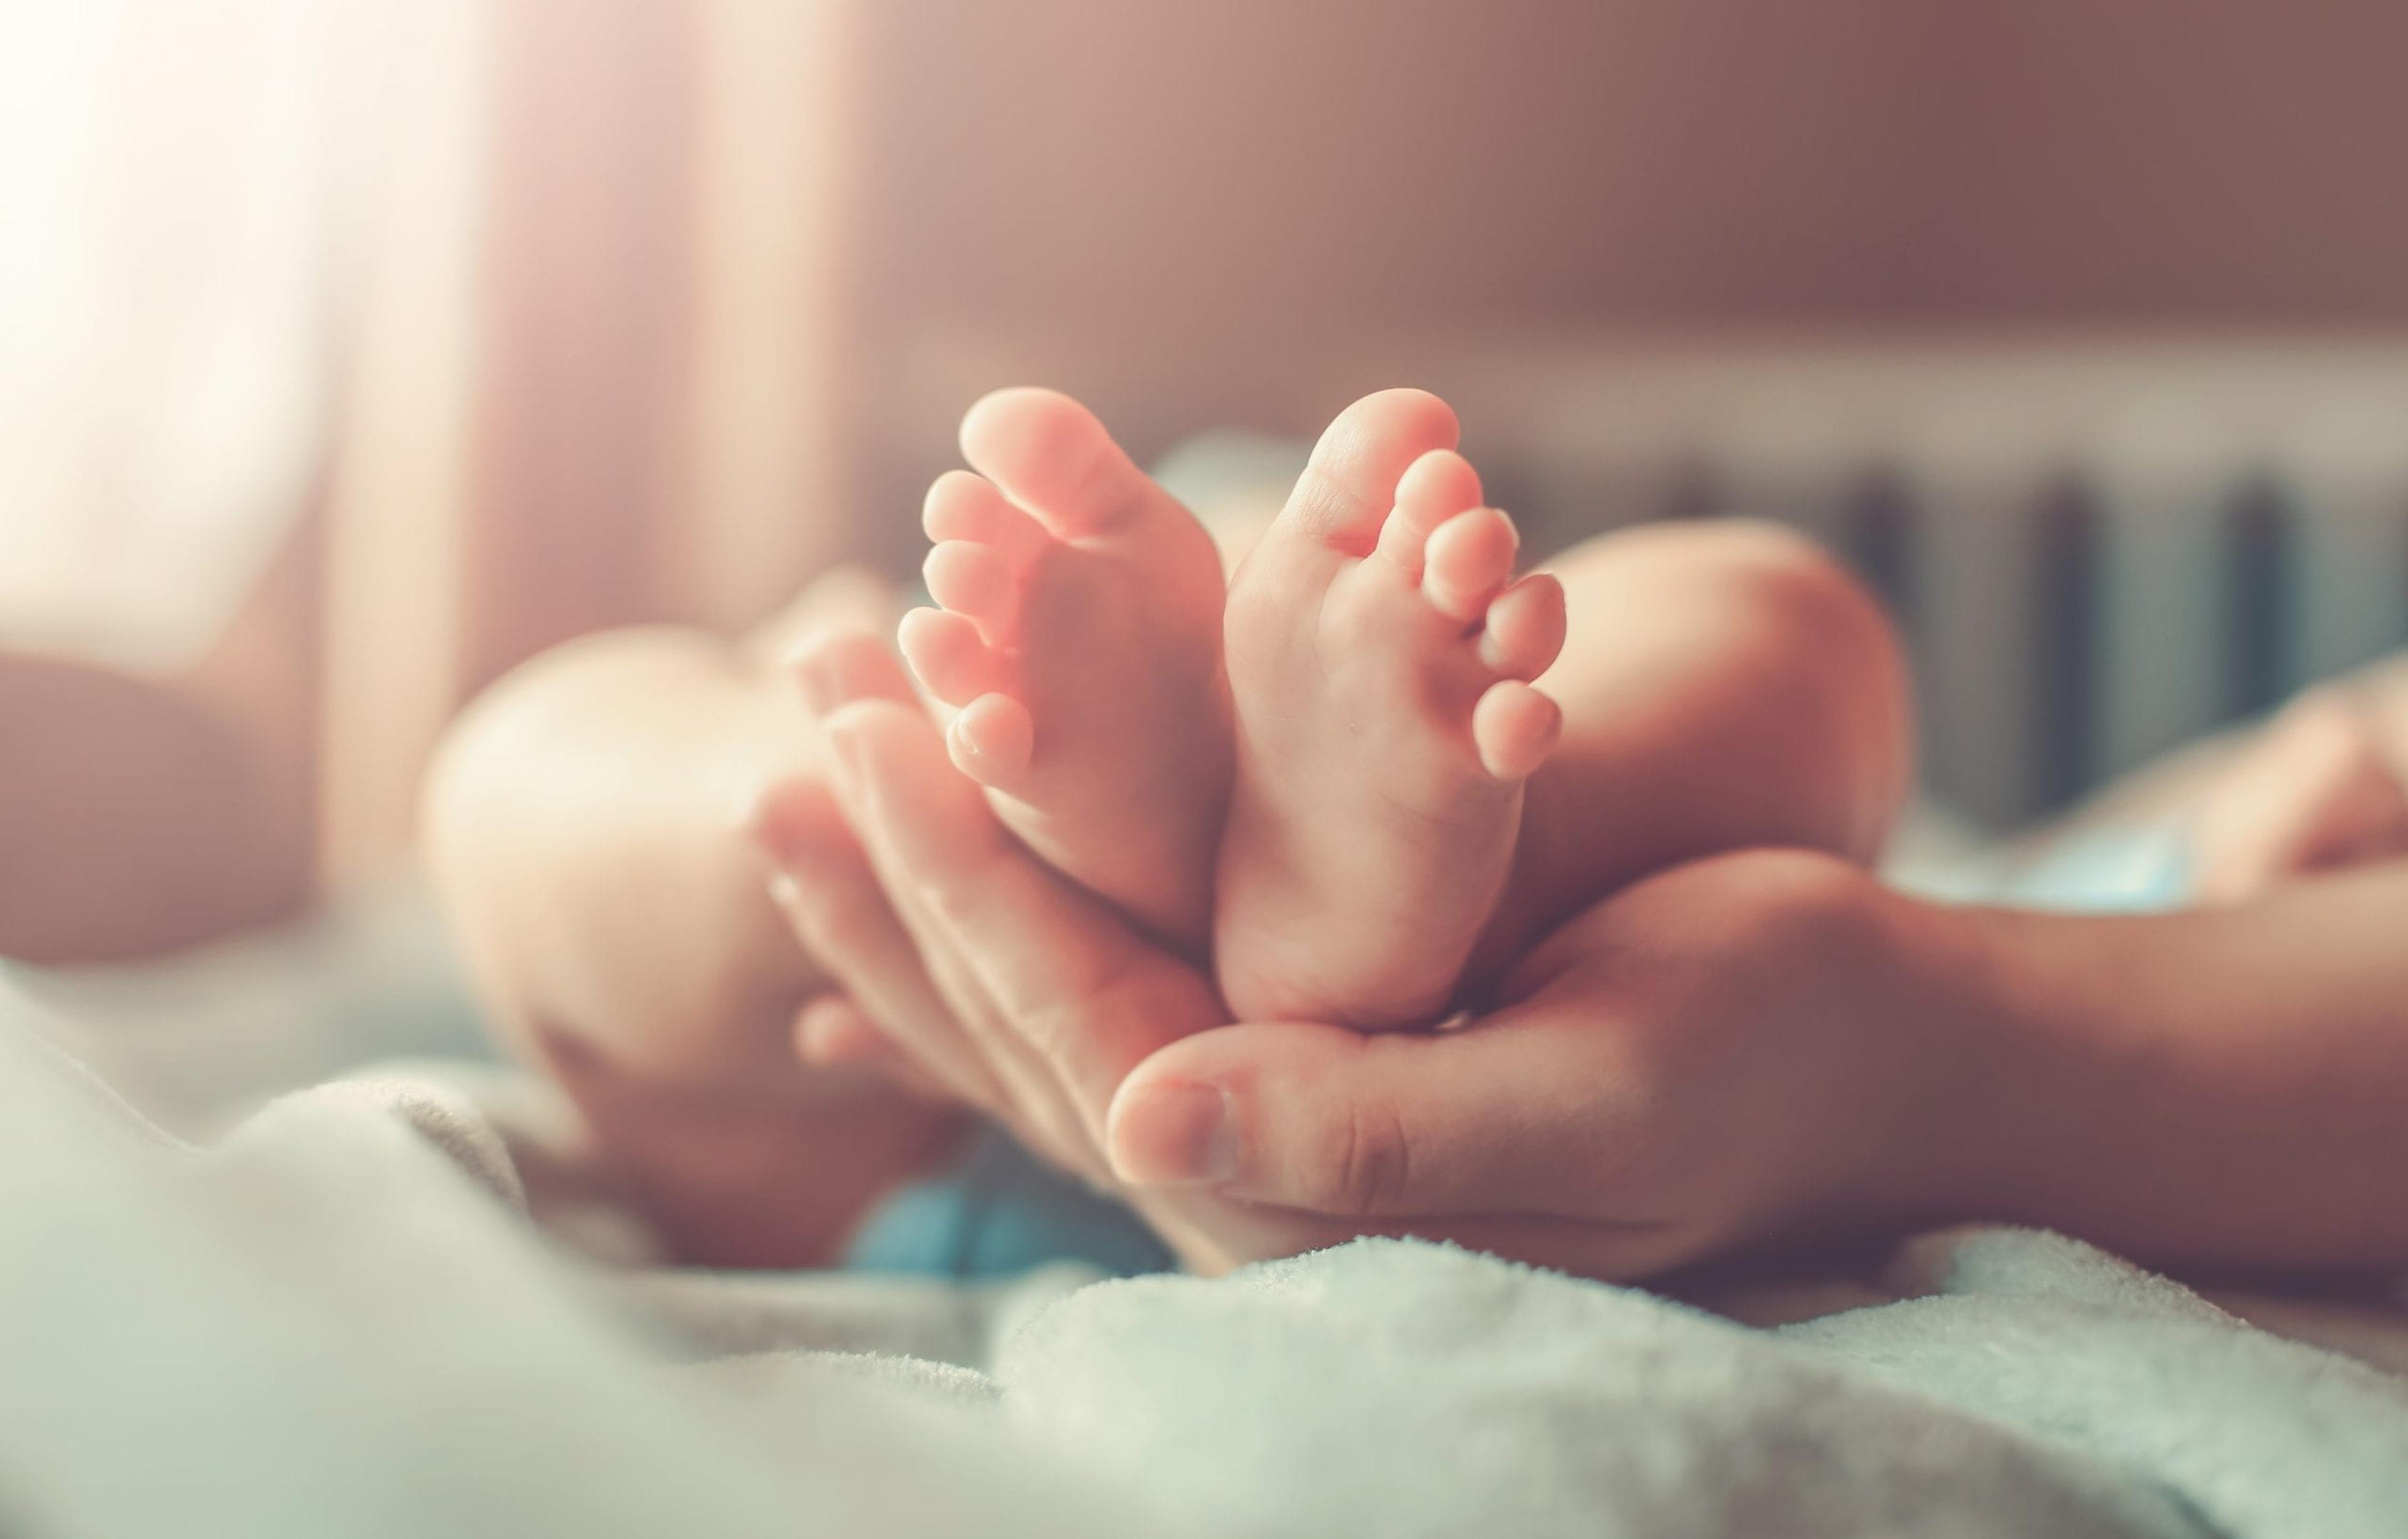 Soft-focus image of baby feet.